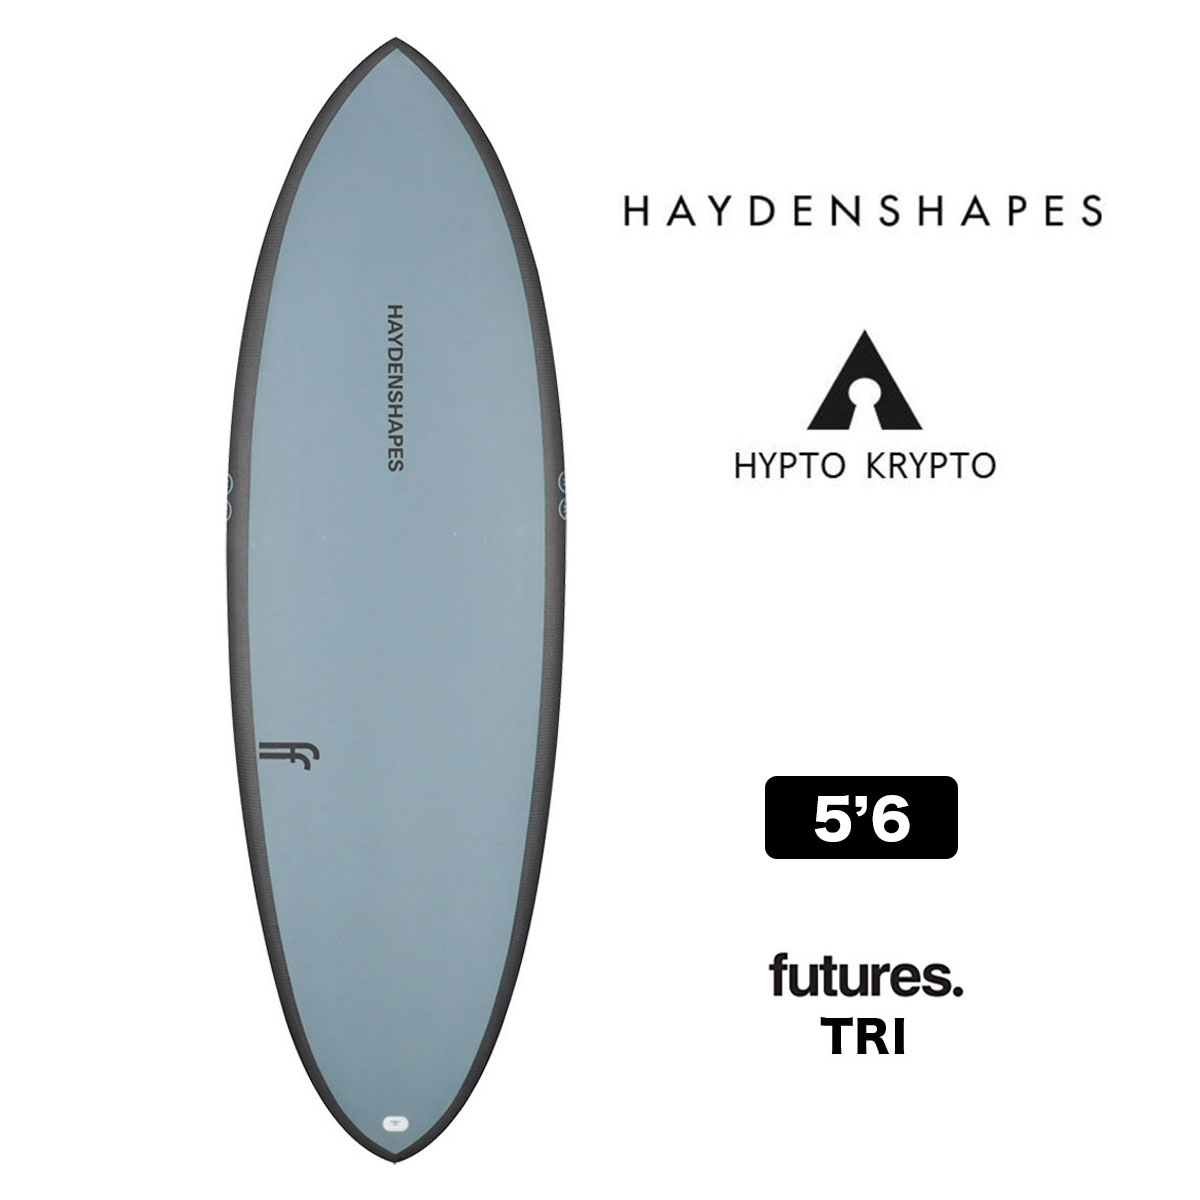 HAYDENSHAPES HYPTO KRYPTO 5.6 ヘイデン シェイプス ヒプトクリプト 5'6 futures. TRI ショートボード  サーフボード サーフィン ブルー-ジャックオーシャンスポーツ